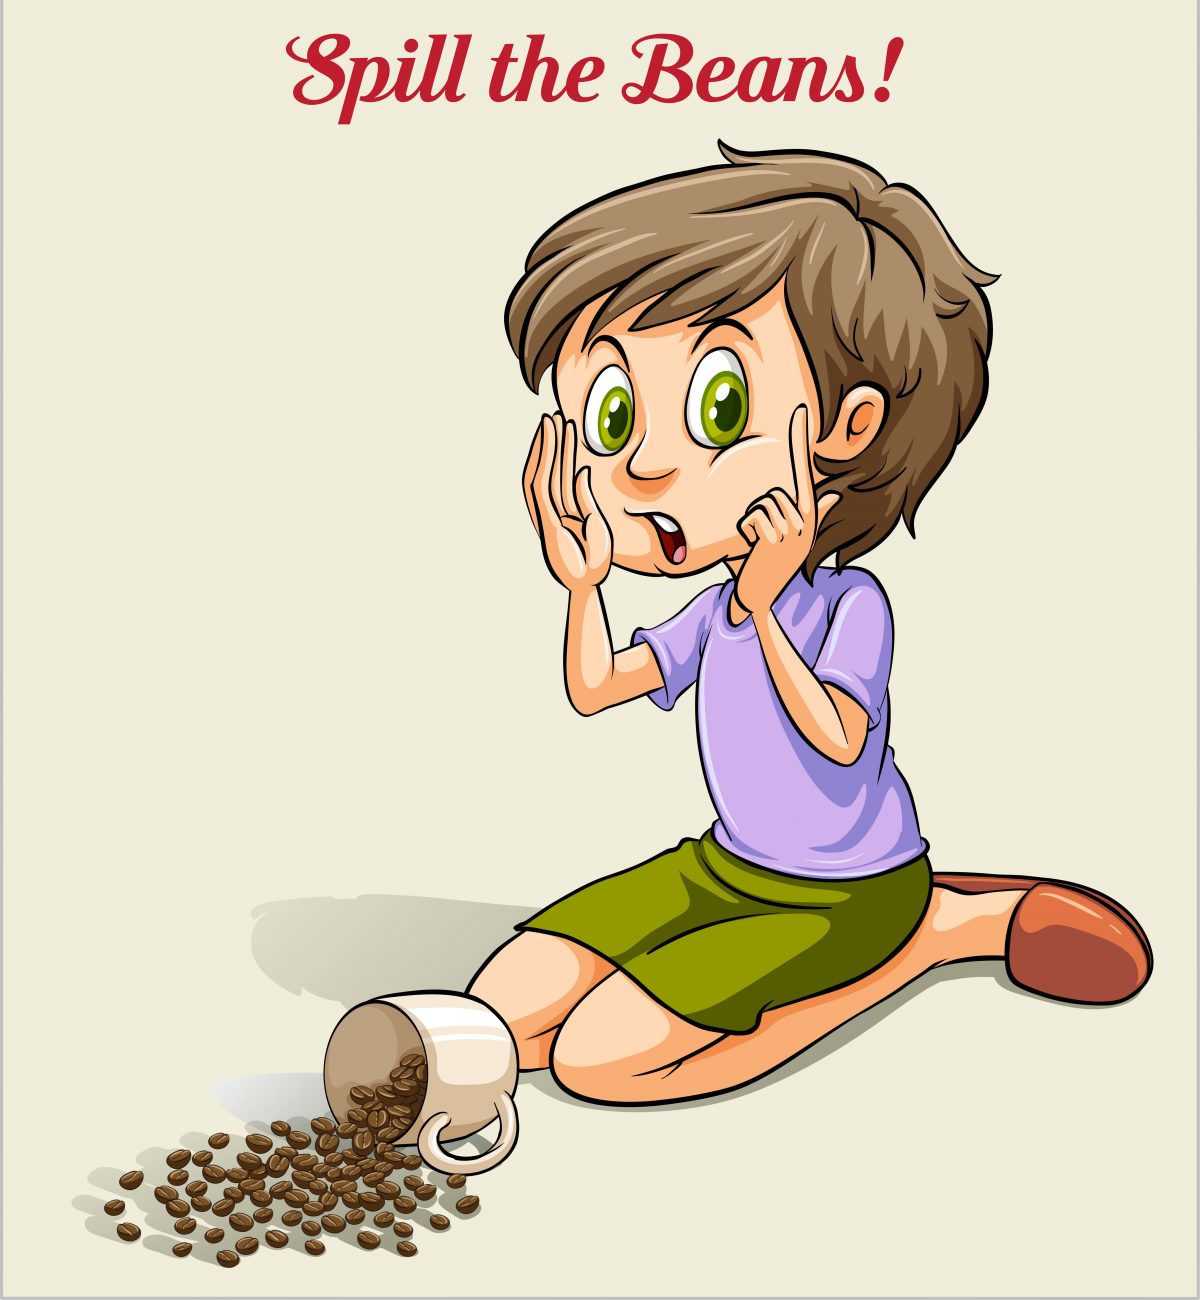 Idiomy v angličtine - Spill the beans